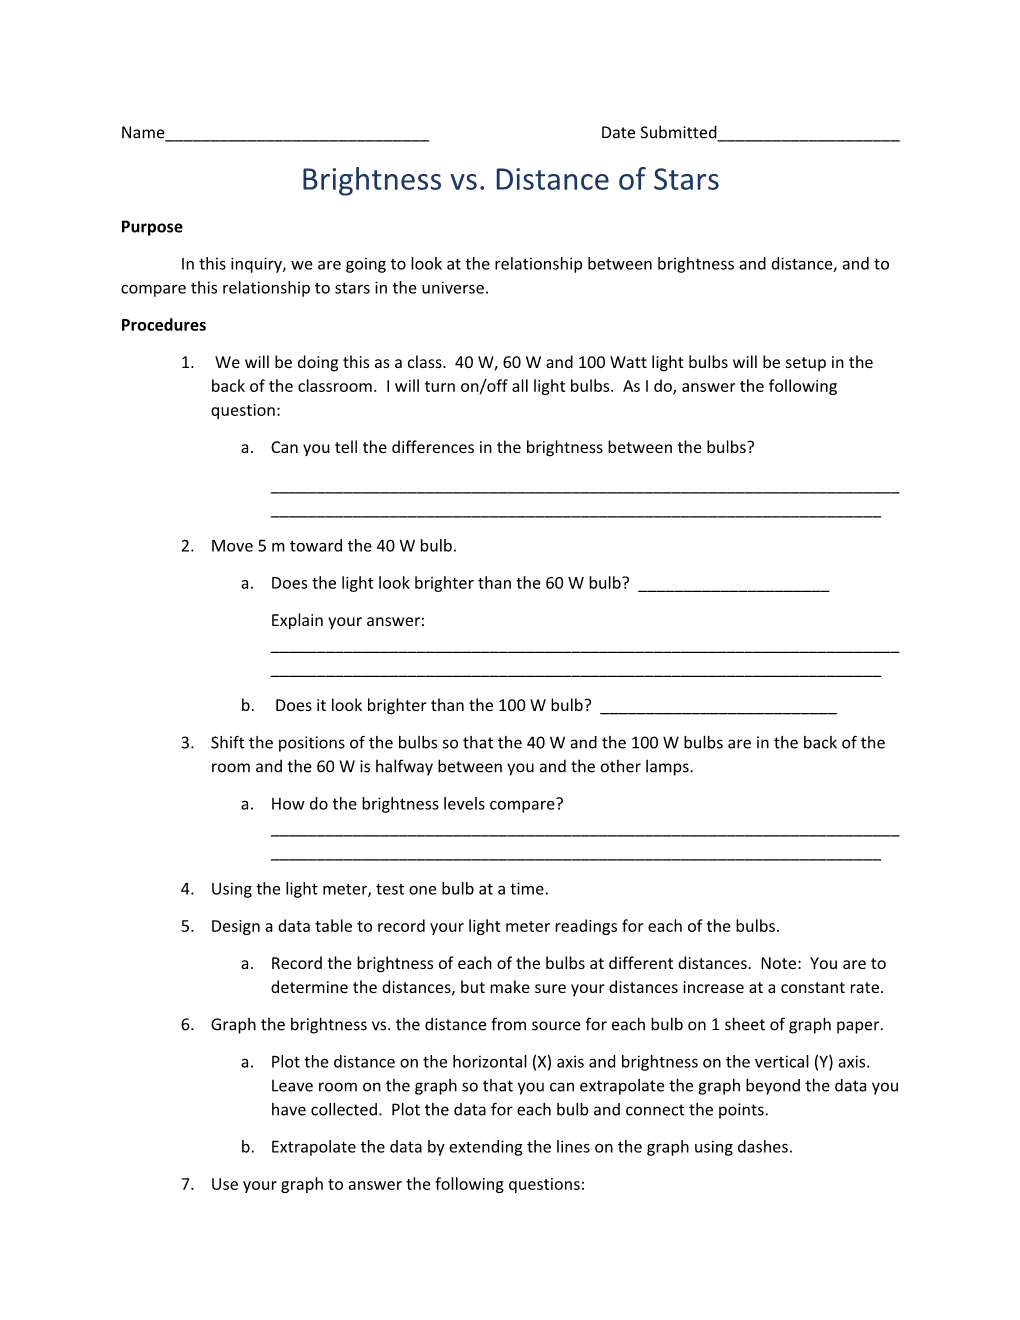 Brightness Vs. Distance of Stars